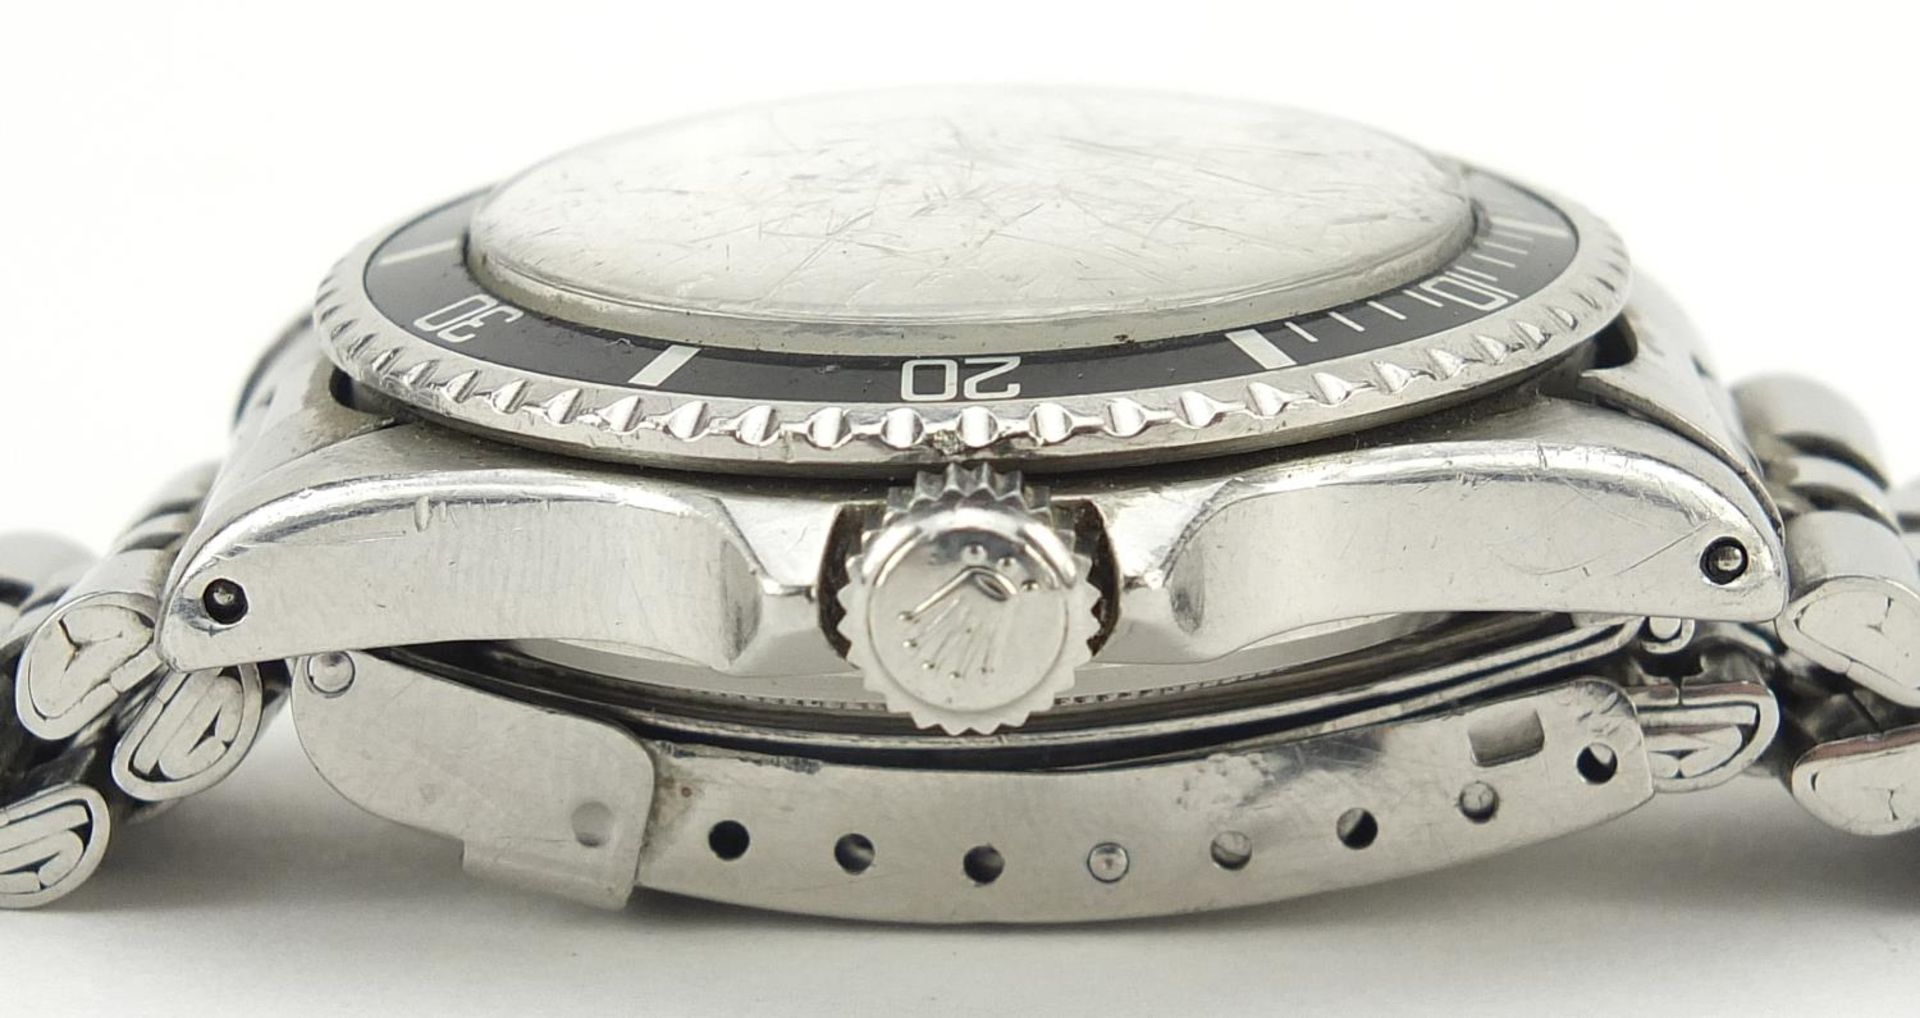 Rolex gentlemen's Submariner automatic wristwatch, ref 5513, serial number 1005684, 40mm in diameter - Image 4 of 9